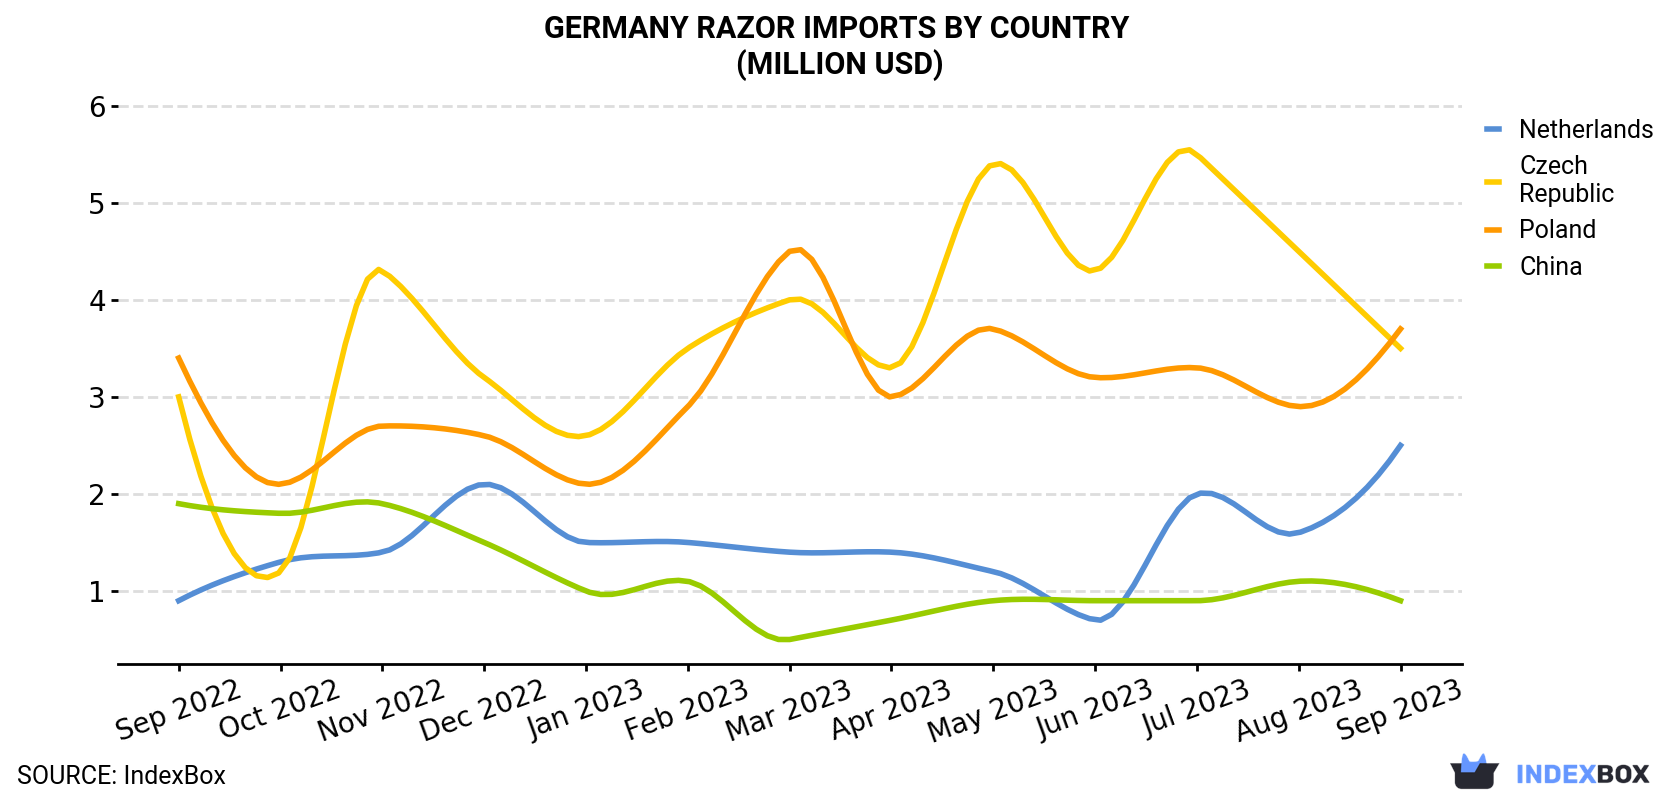 Germany Razor Imports By Country (Million USD)